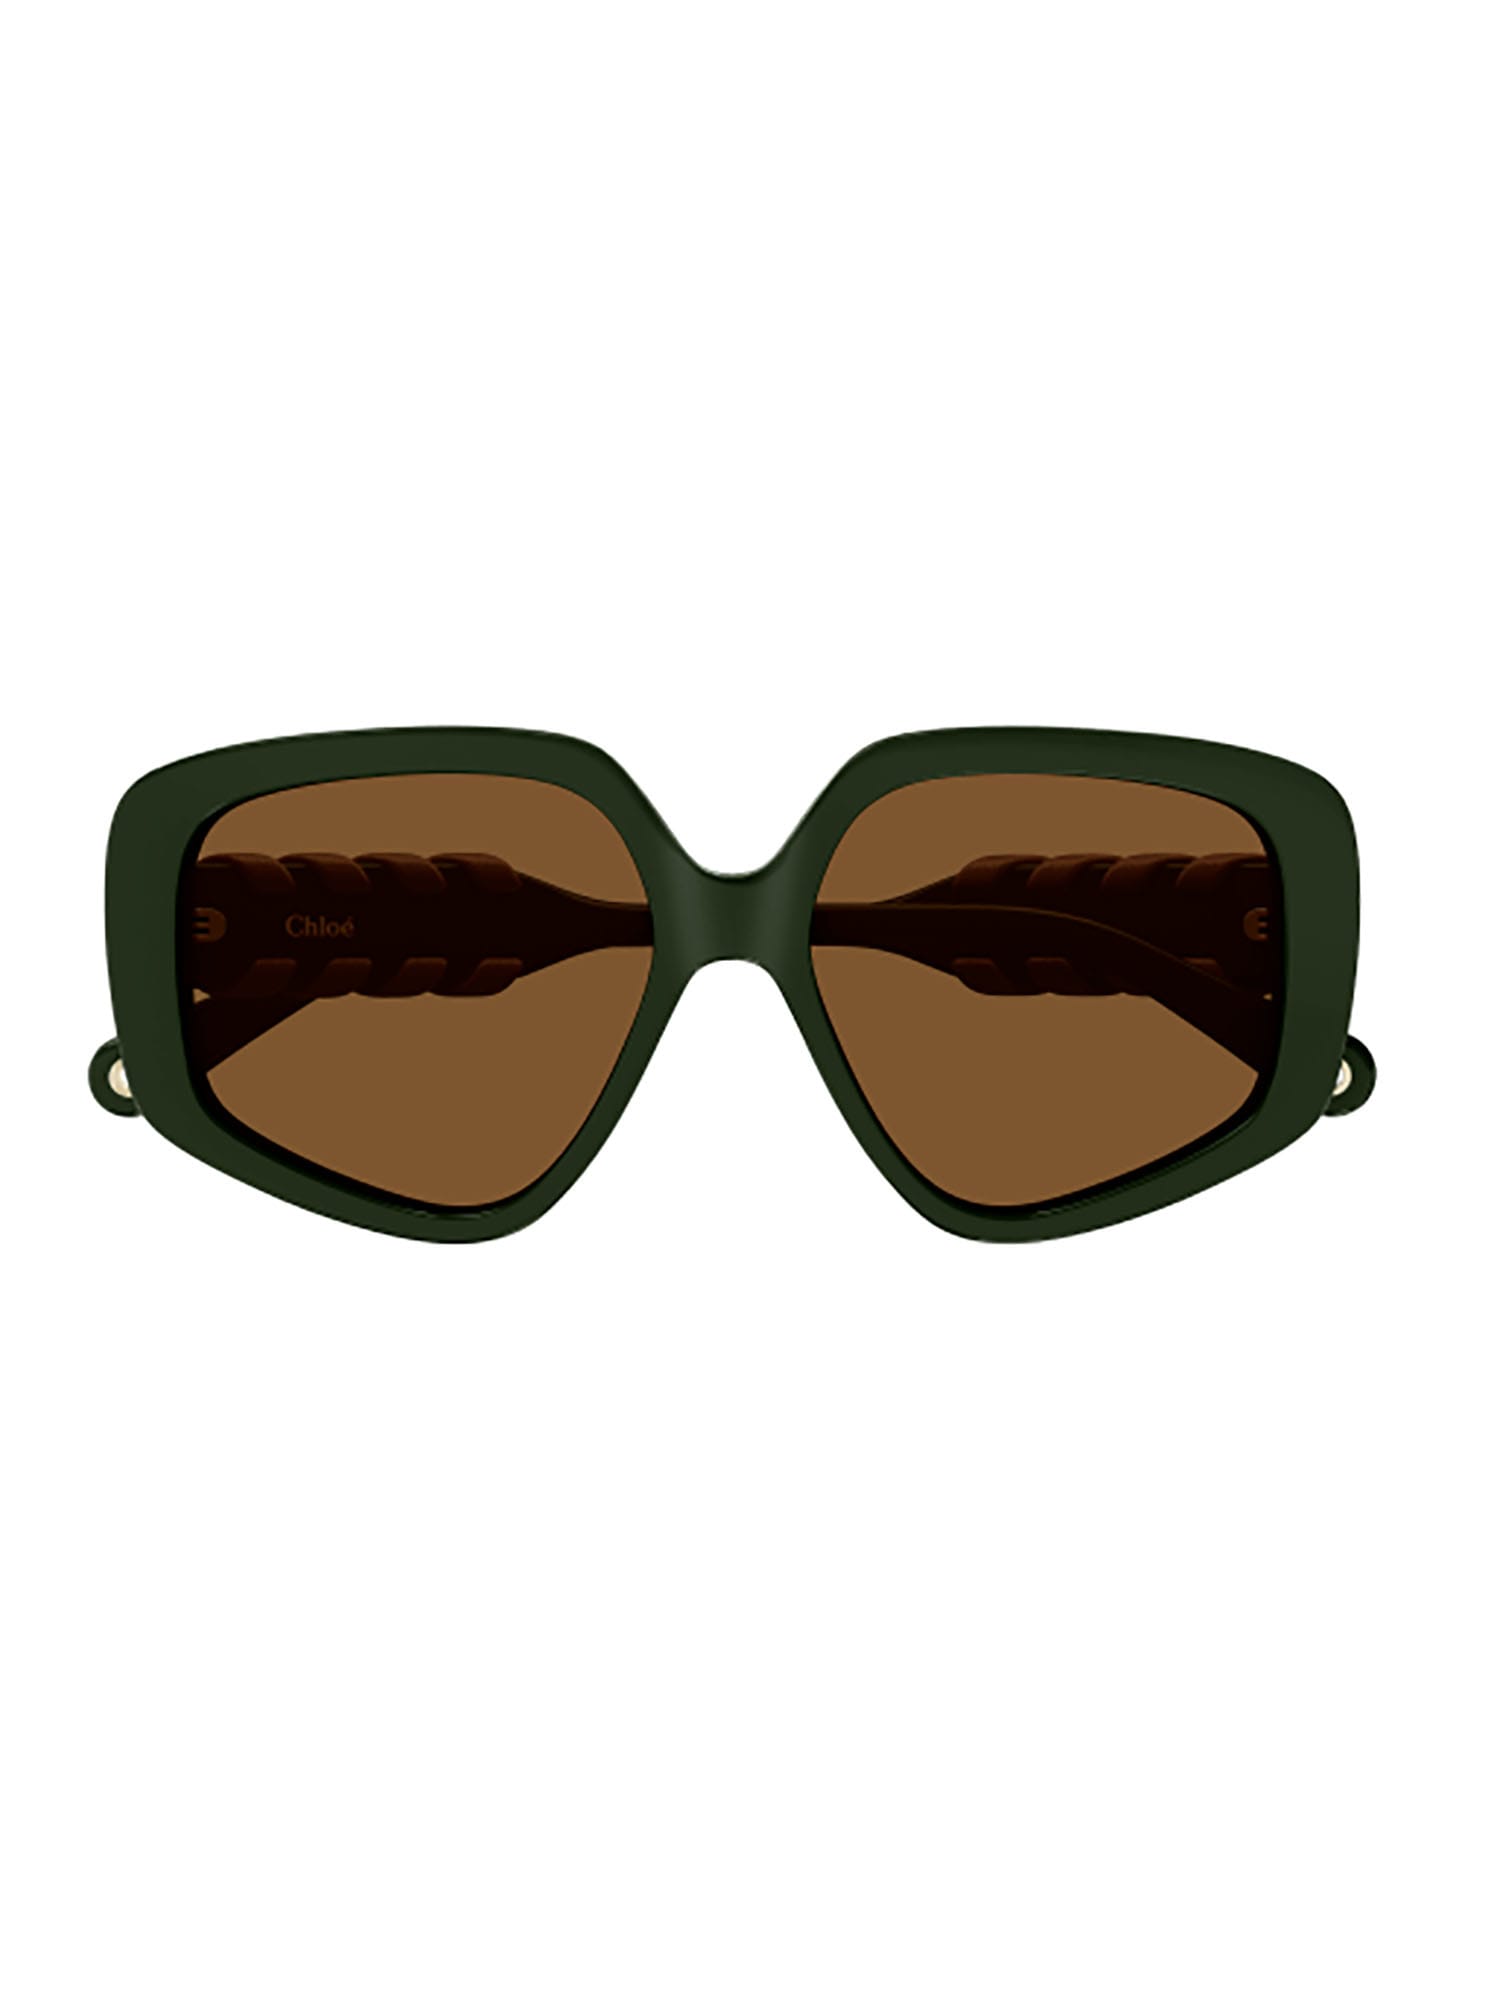 Chloé Ch0210s Sunglasses In Green Green Brown